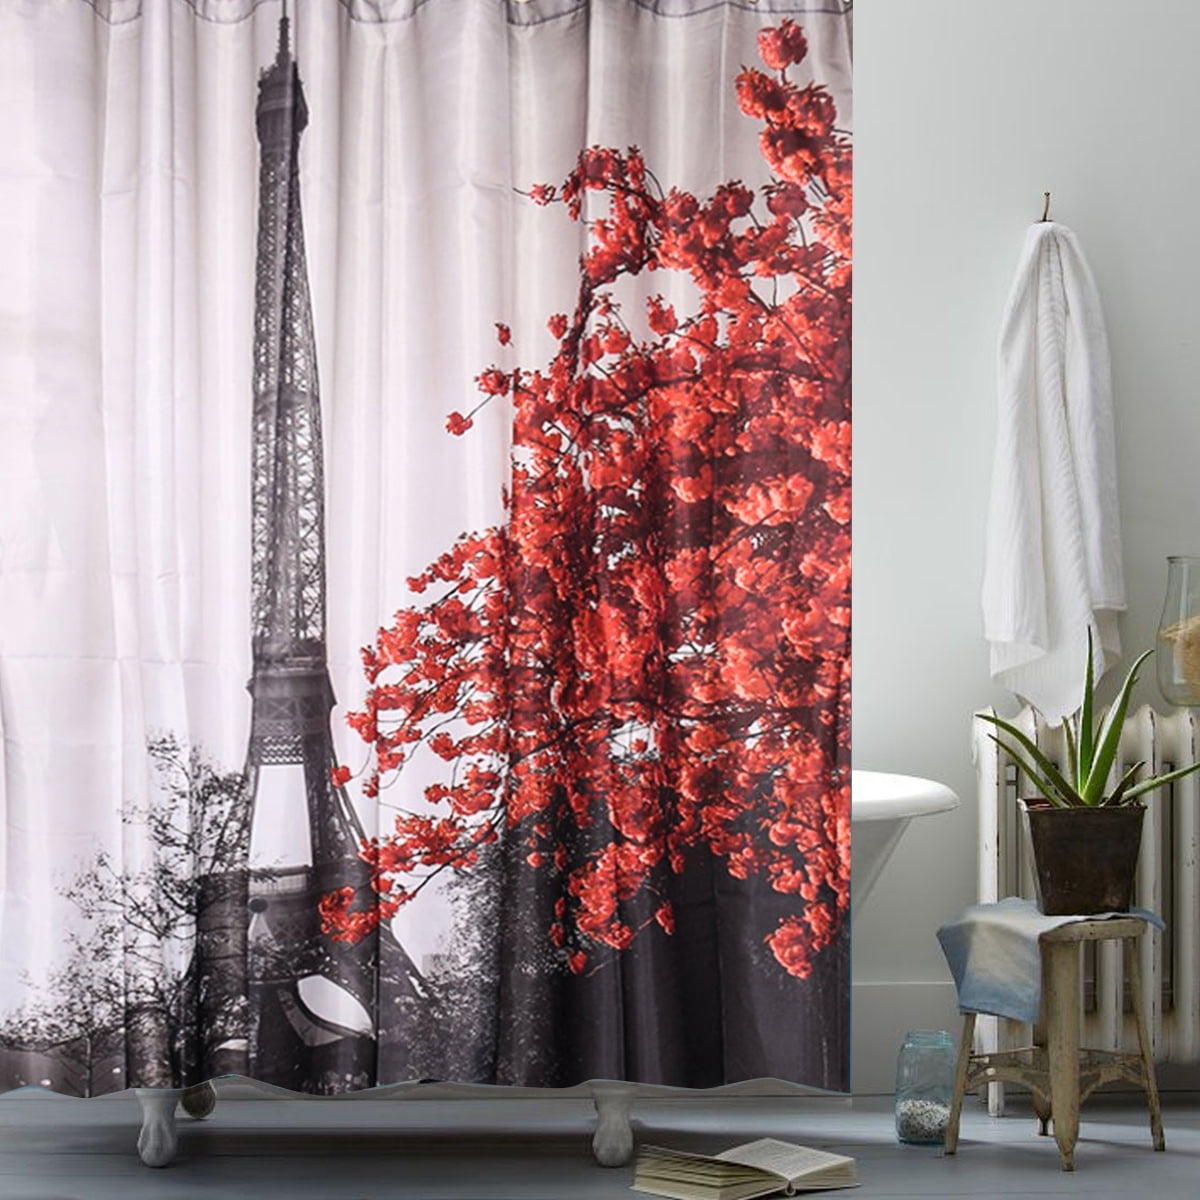 Love Paris Eiffel Tower Bathroom Shower Curtain Fabric w/12 Hooks 71*71inches 